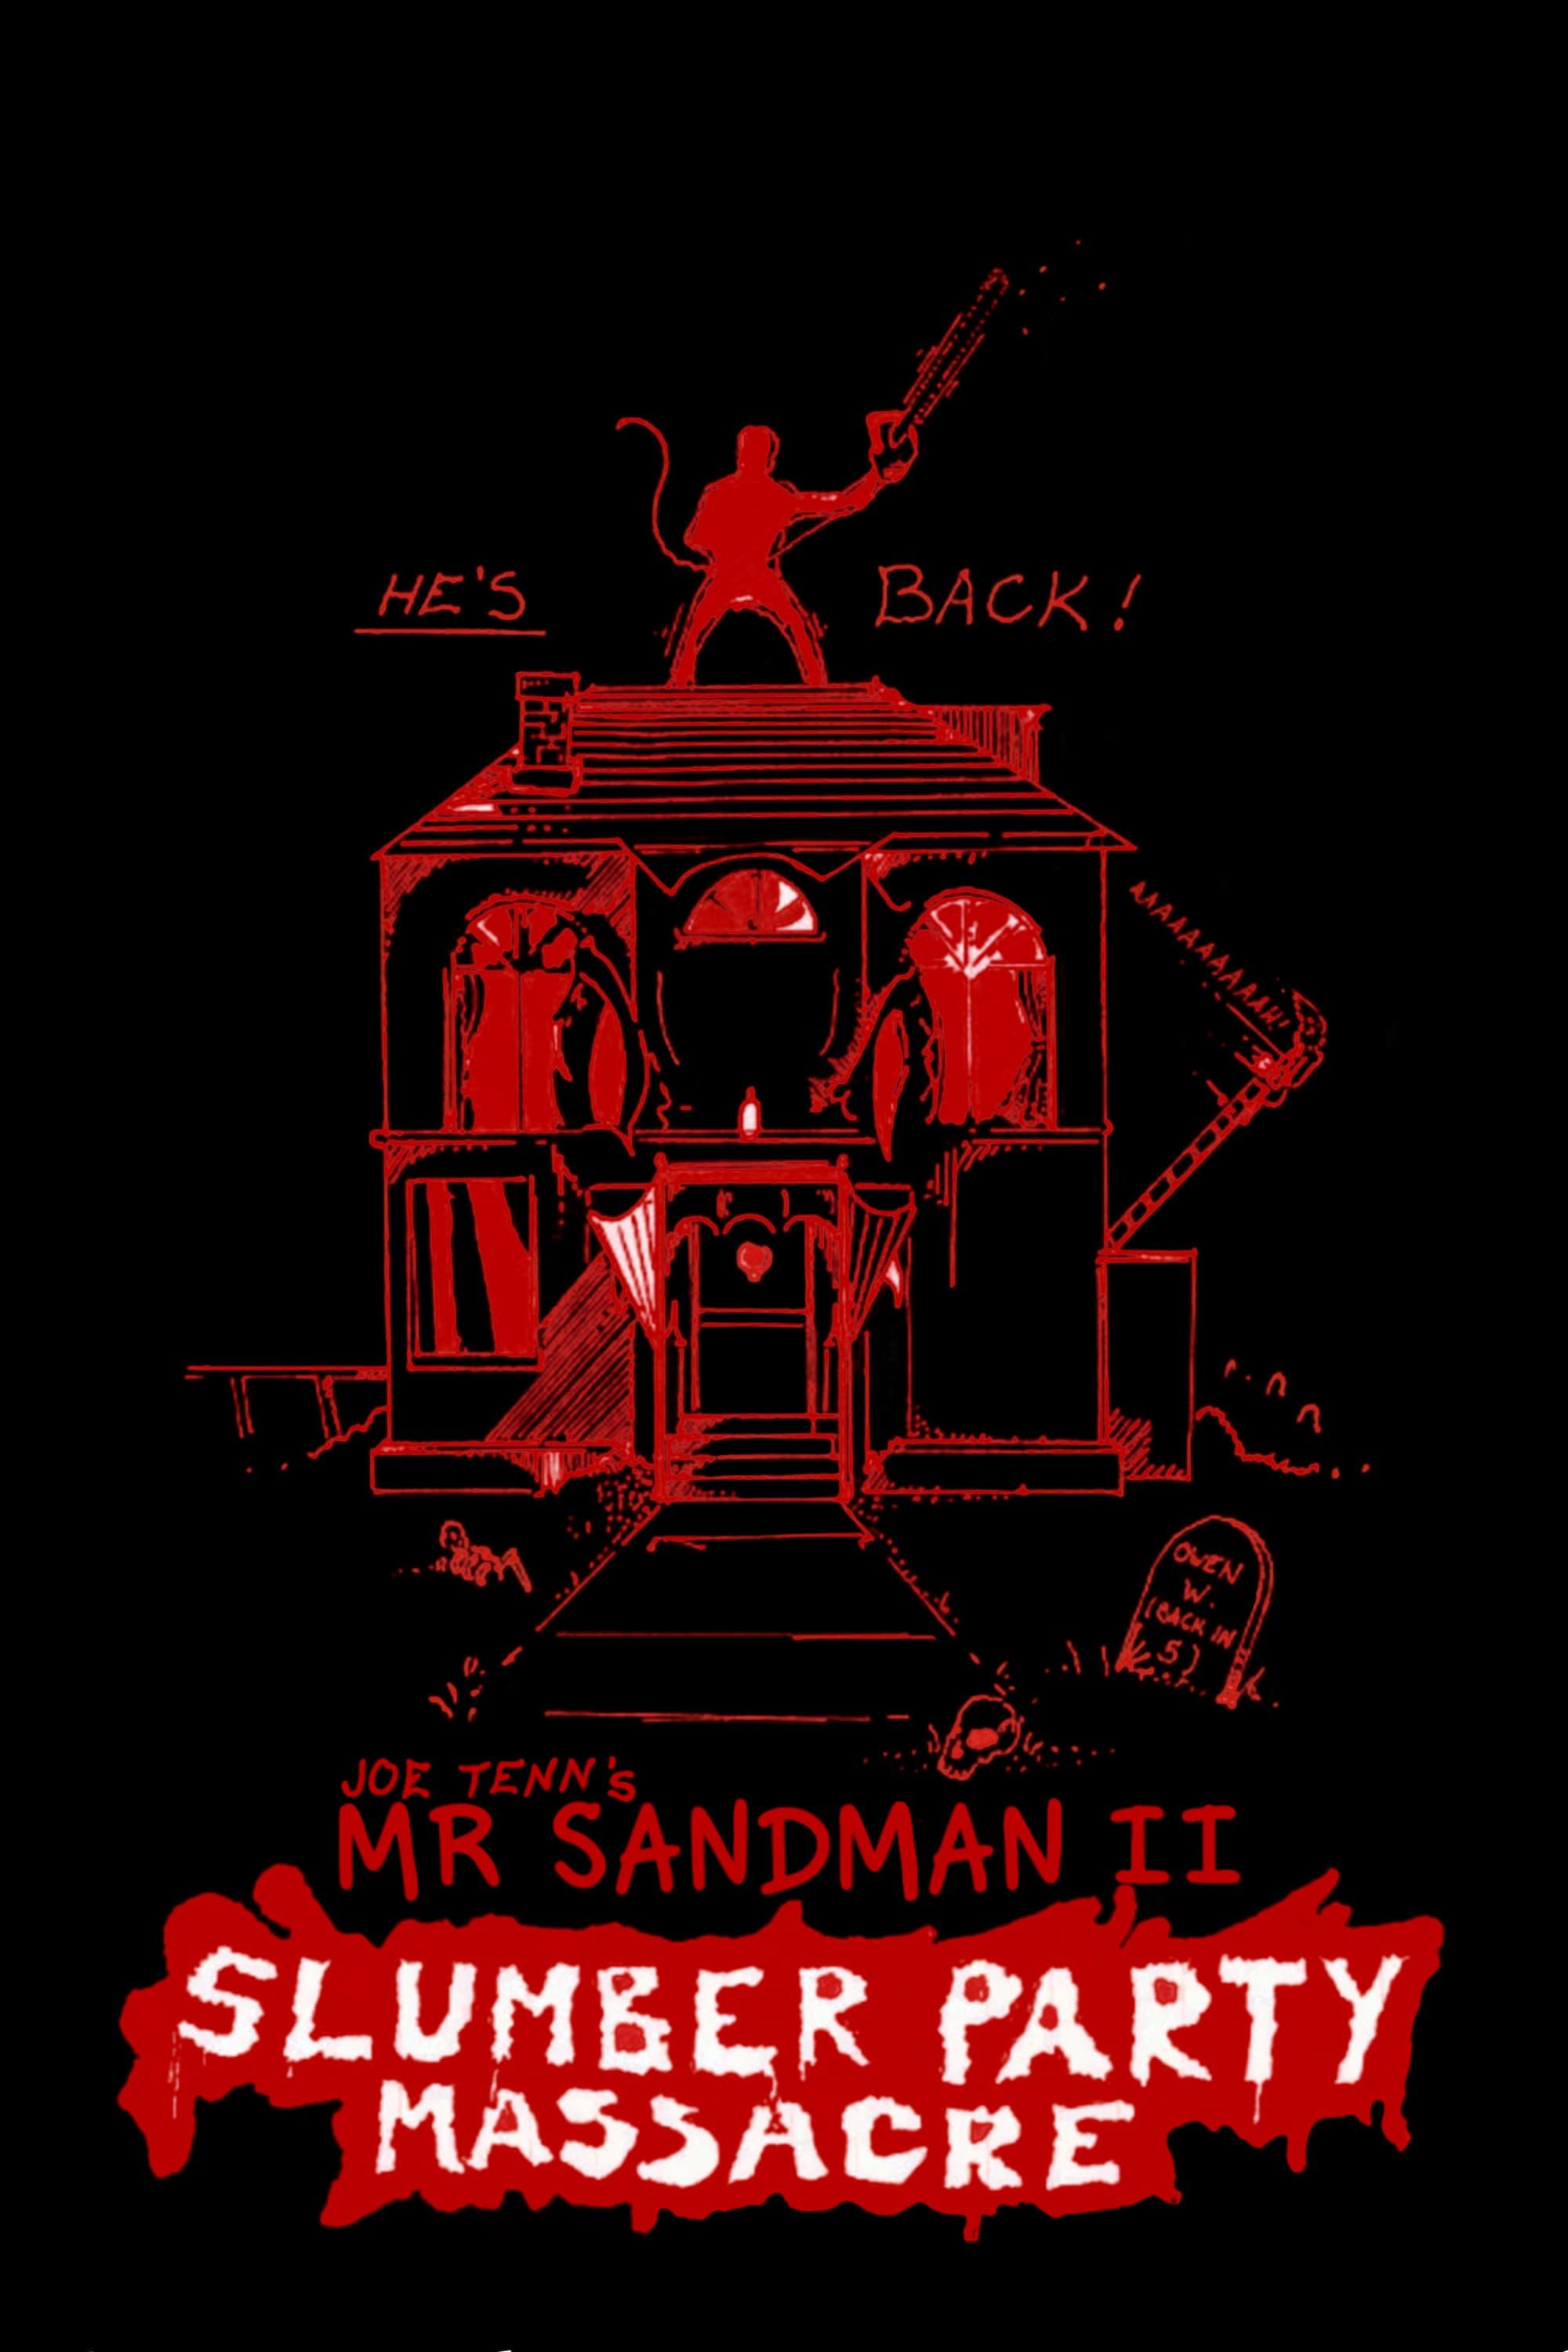 Mr Sandman II: The Slumber Party Massacre poster